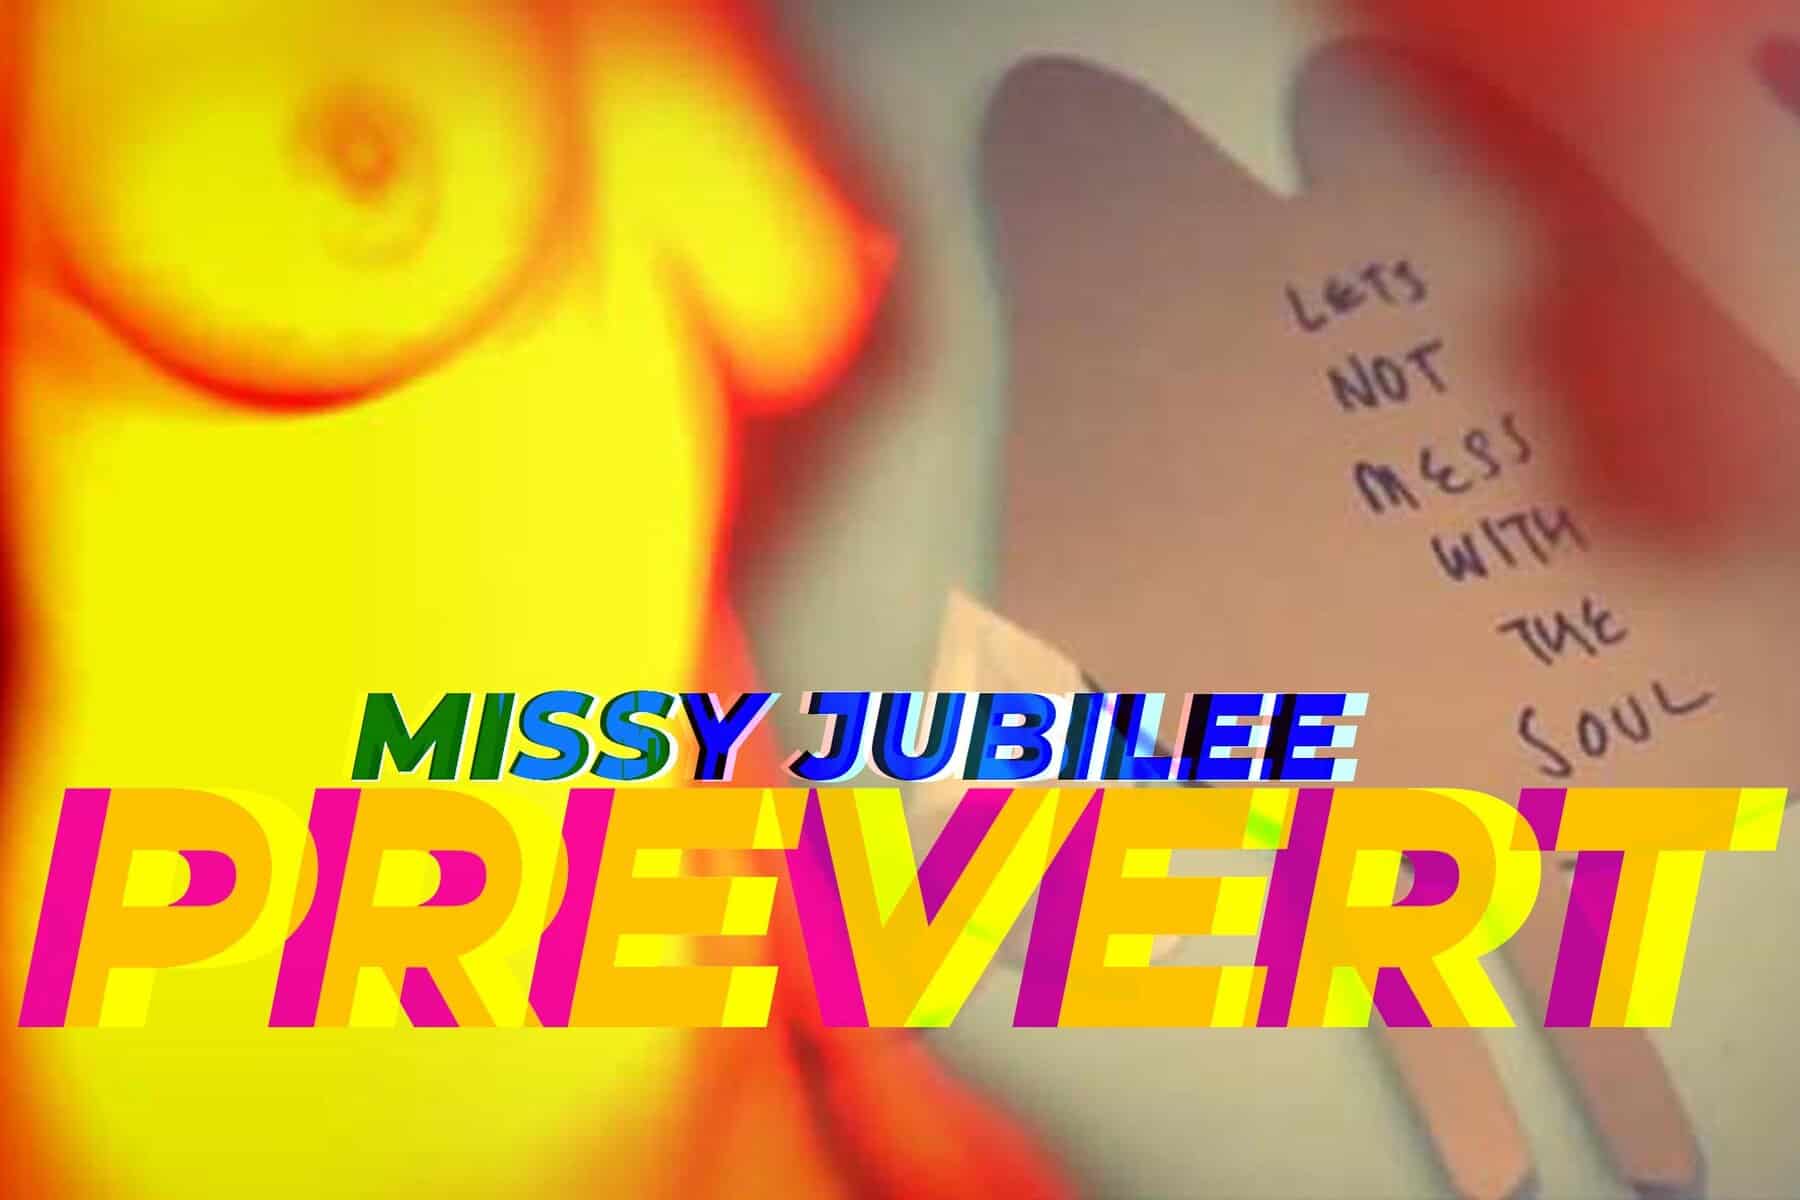 Film release poster Missy Jubilee 112 PREVRRT